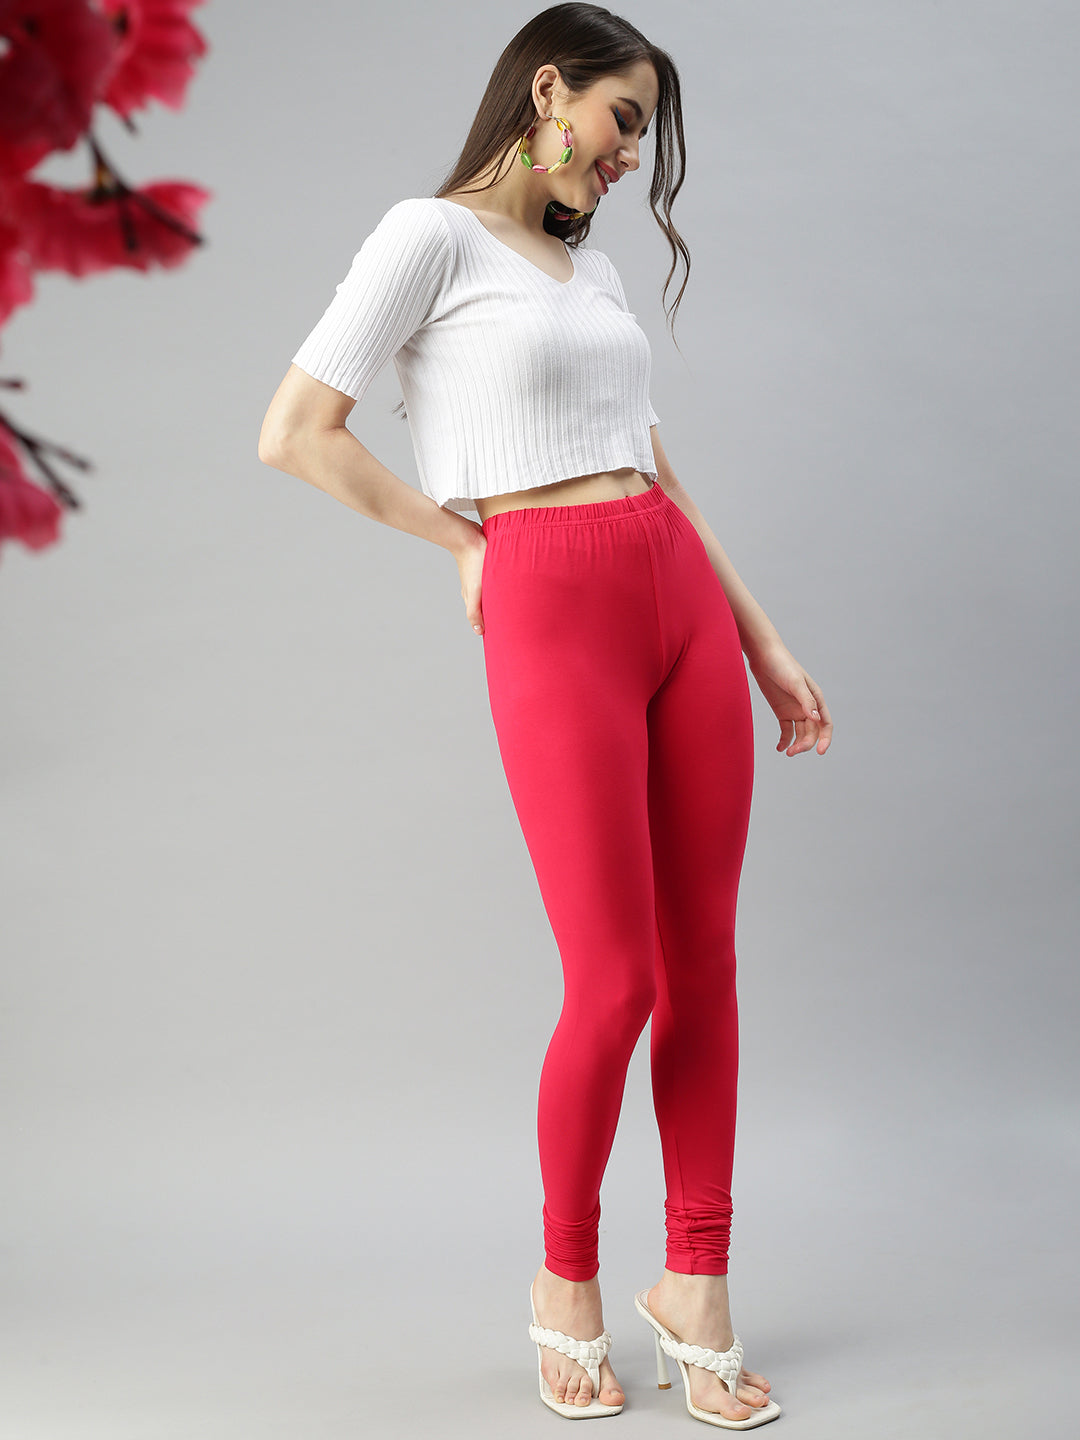 Buy Pink Leggings for Women by Twin Birds Online | Ajio.com